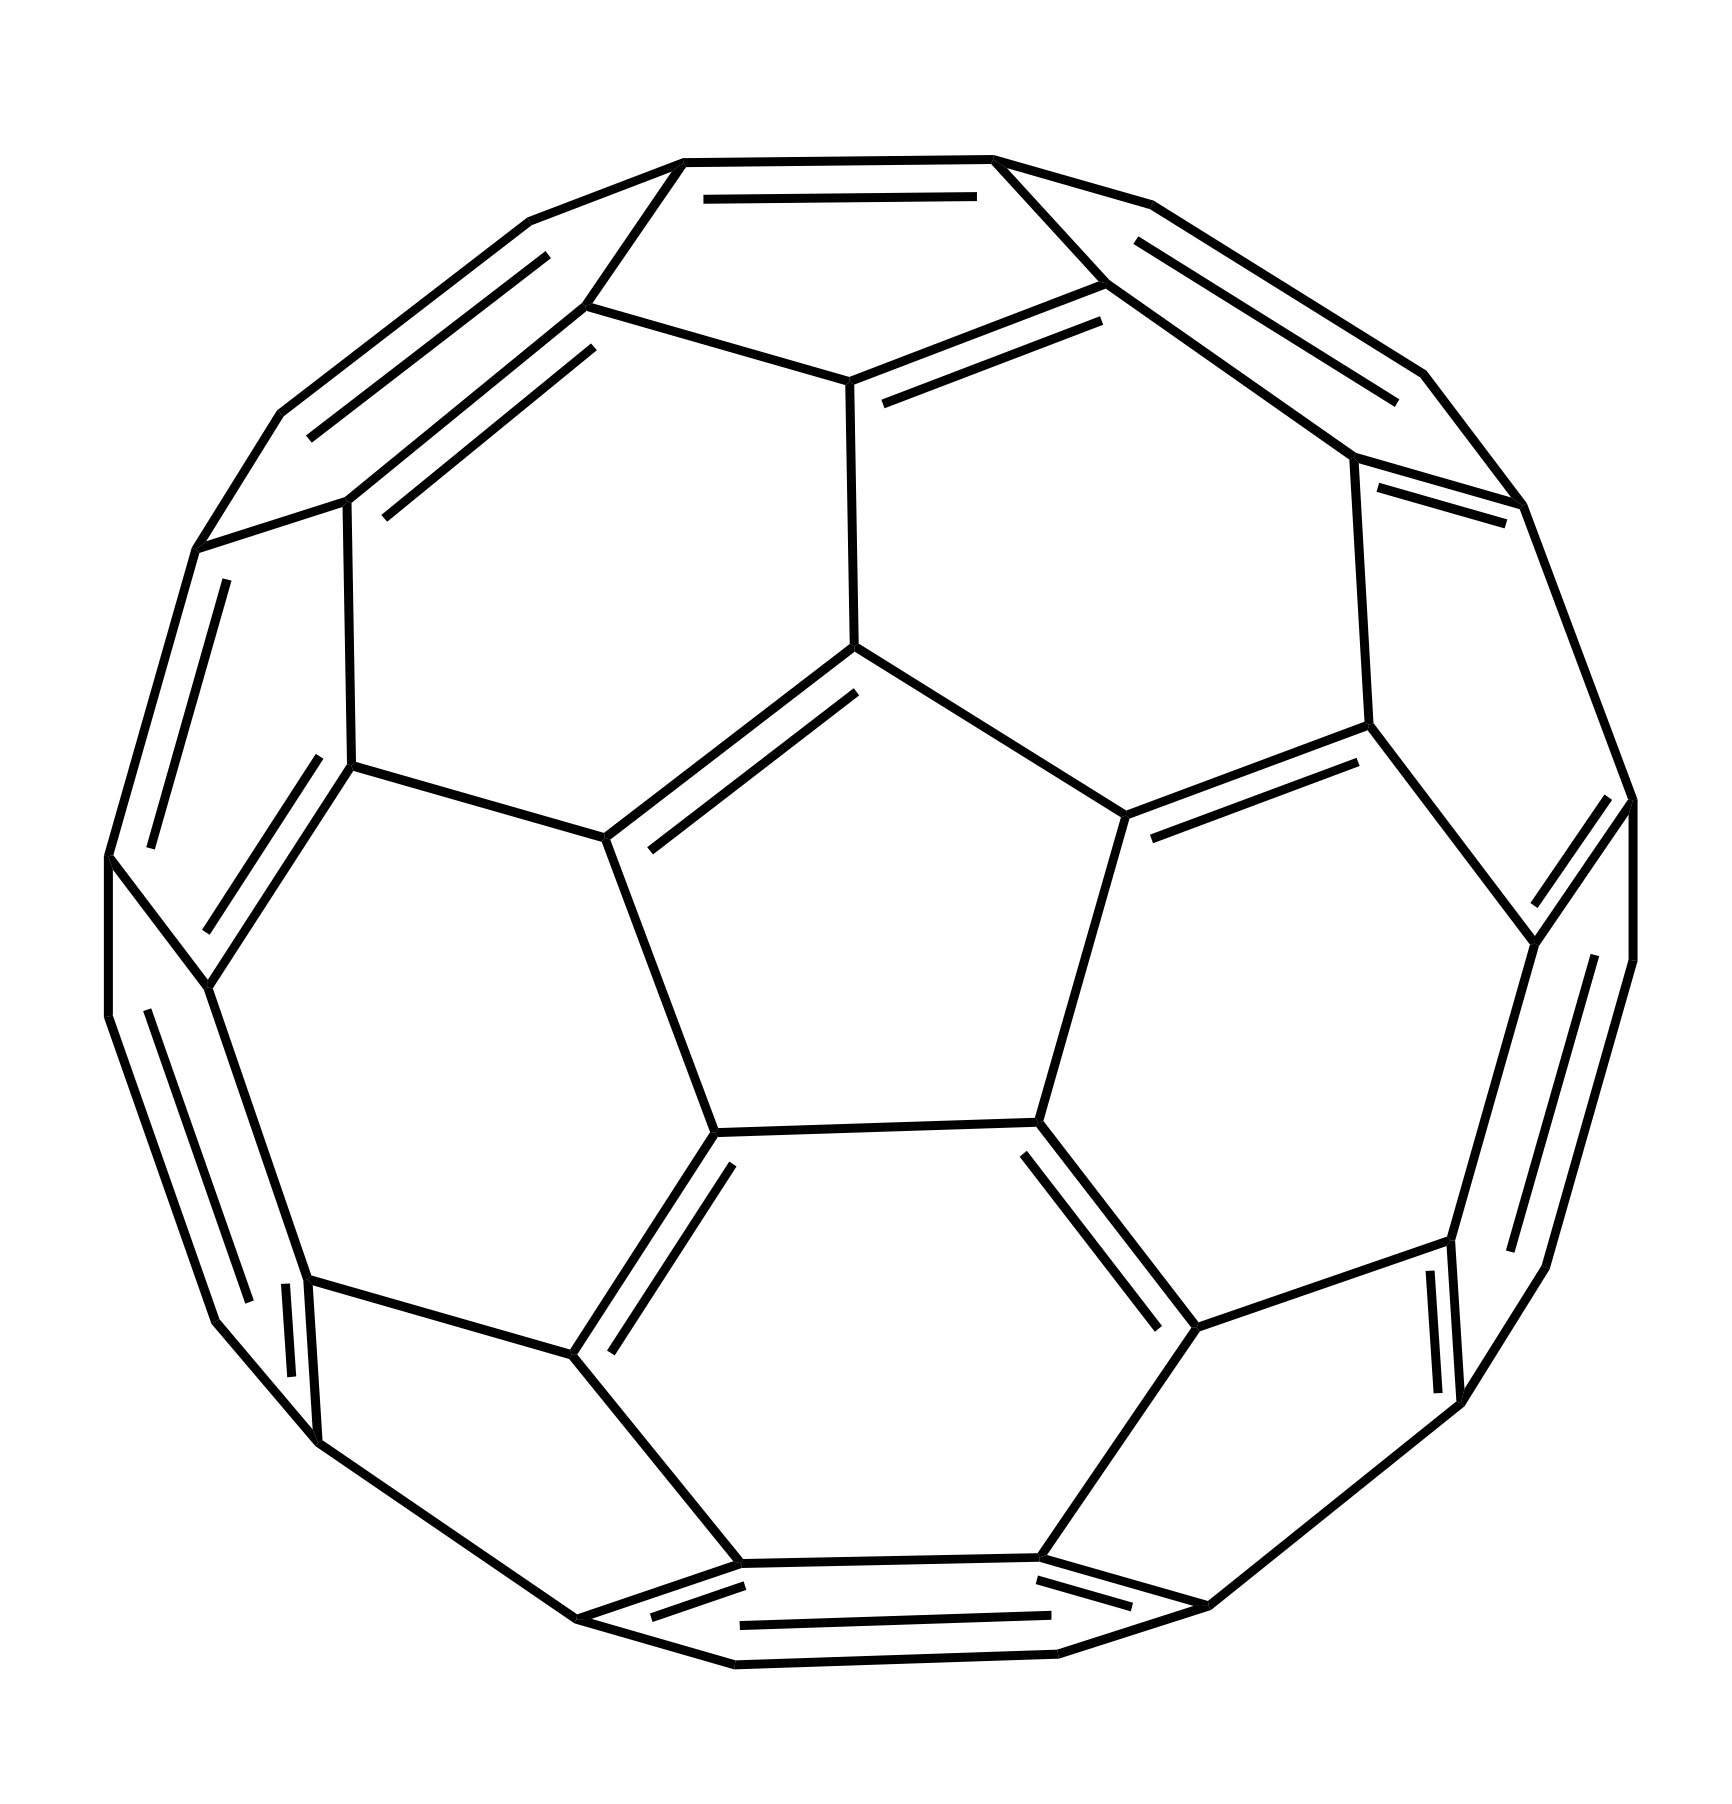 molecular structure of fullerene